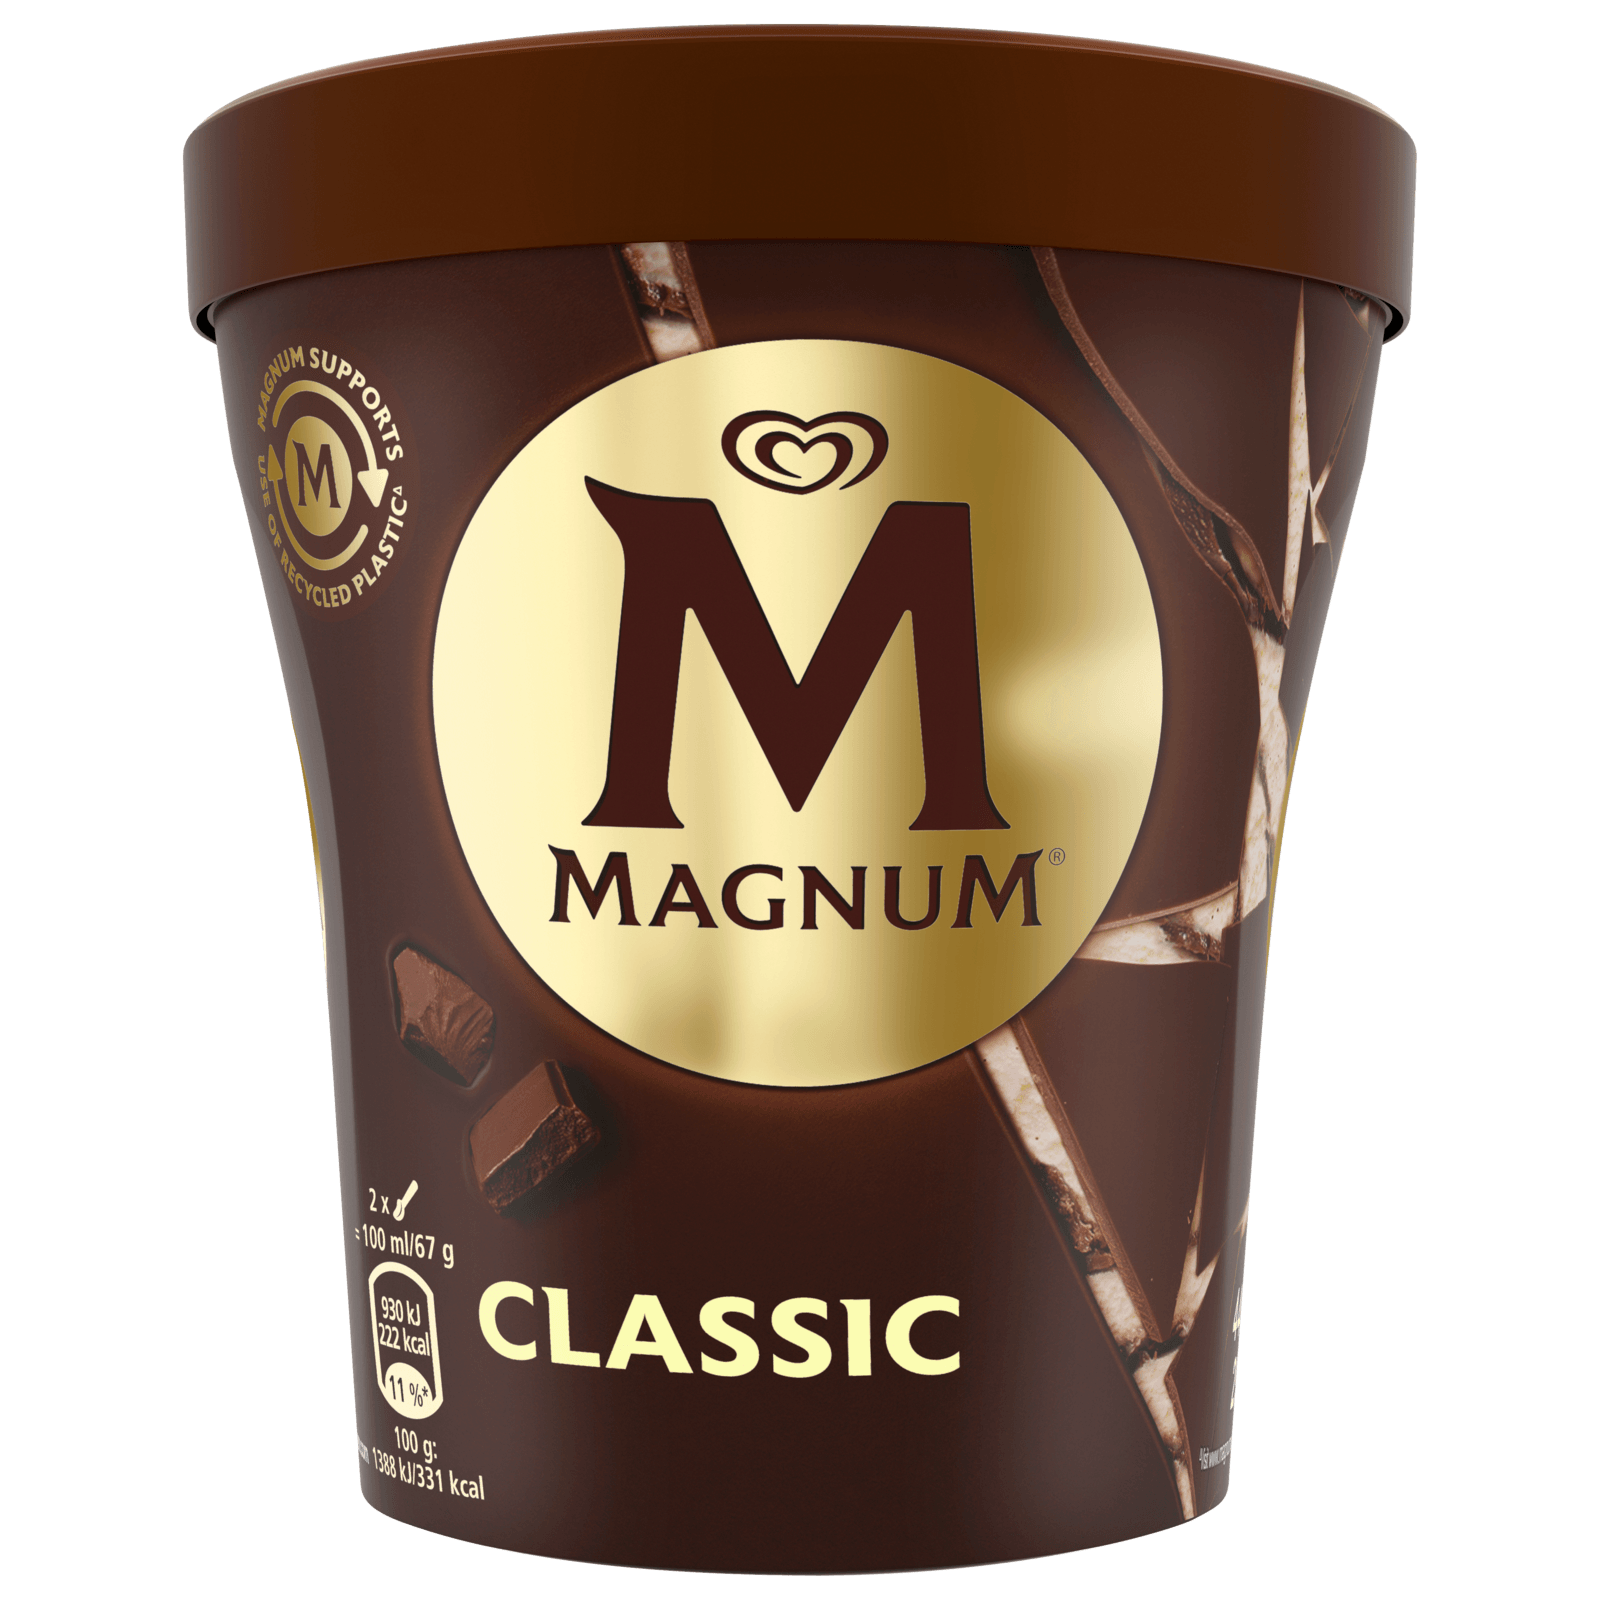 Magnum Classic Becher Eis 440ml Bei Rewe Online Bestellen